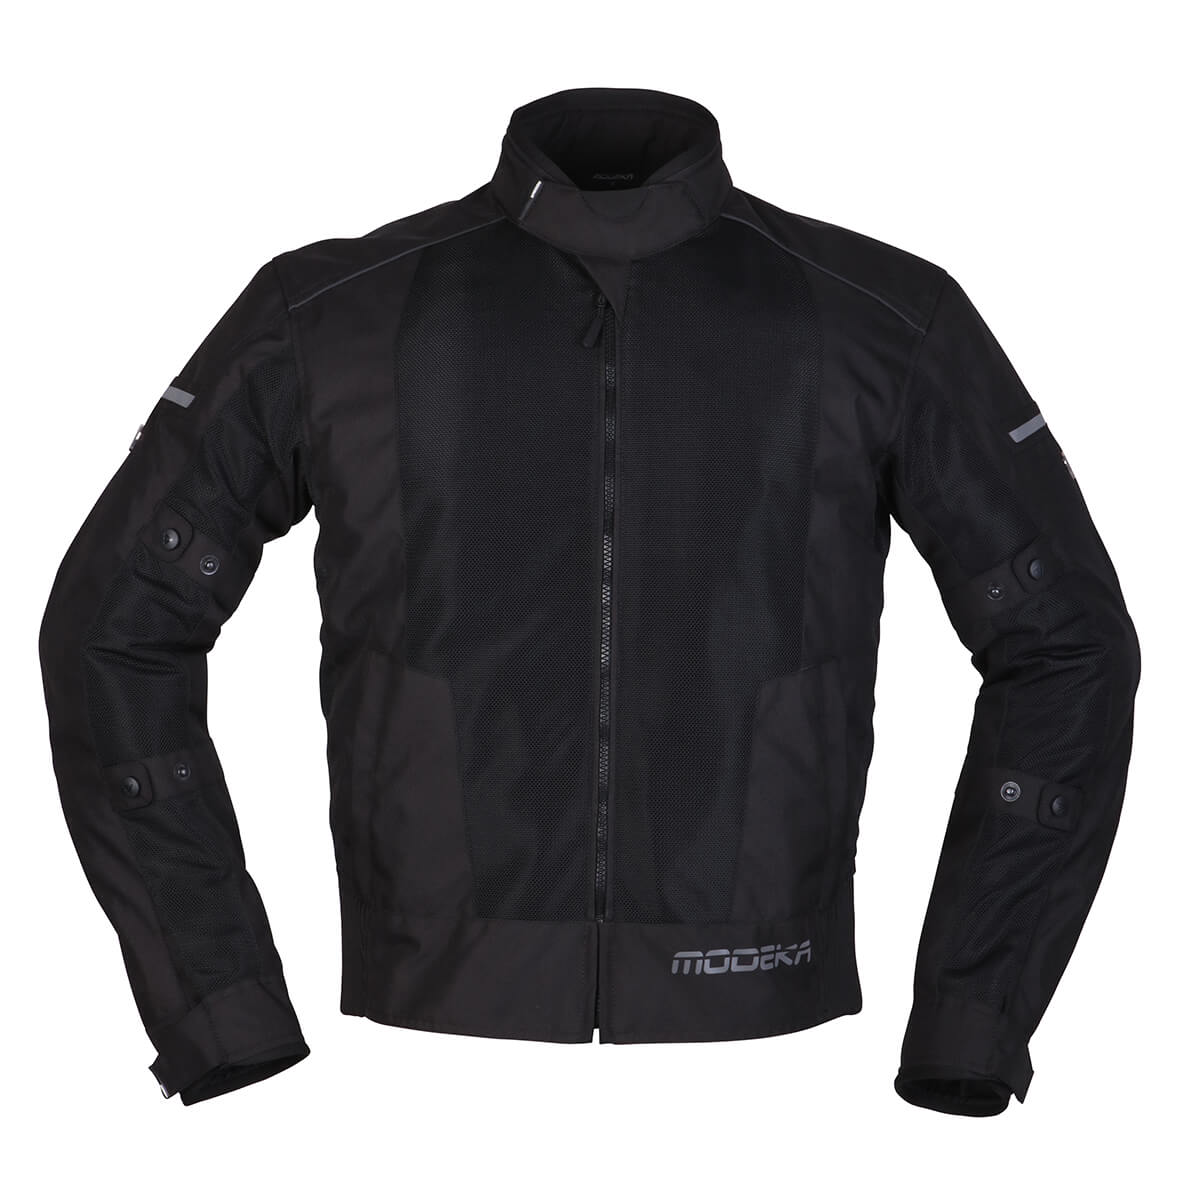 Image of Modeka Veo Air Jacket Black Size 3XL ID 4045765189726